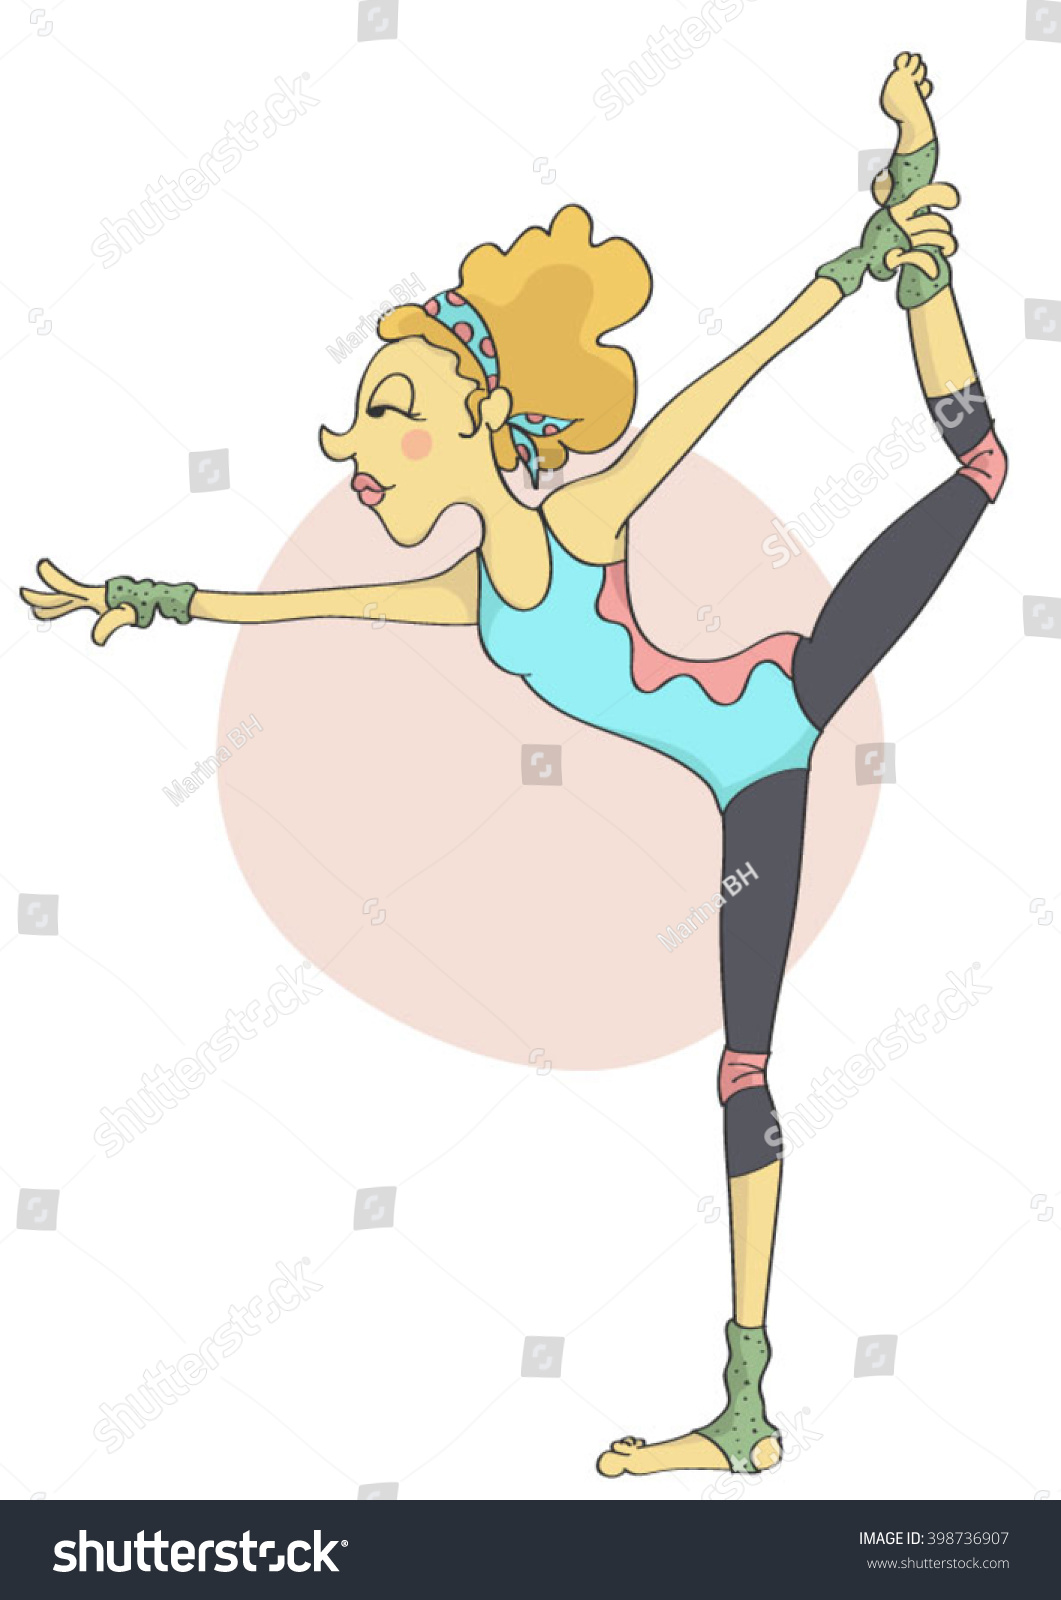 Image result for body balance cartoon